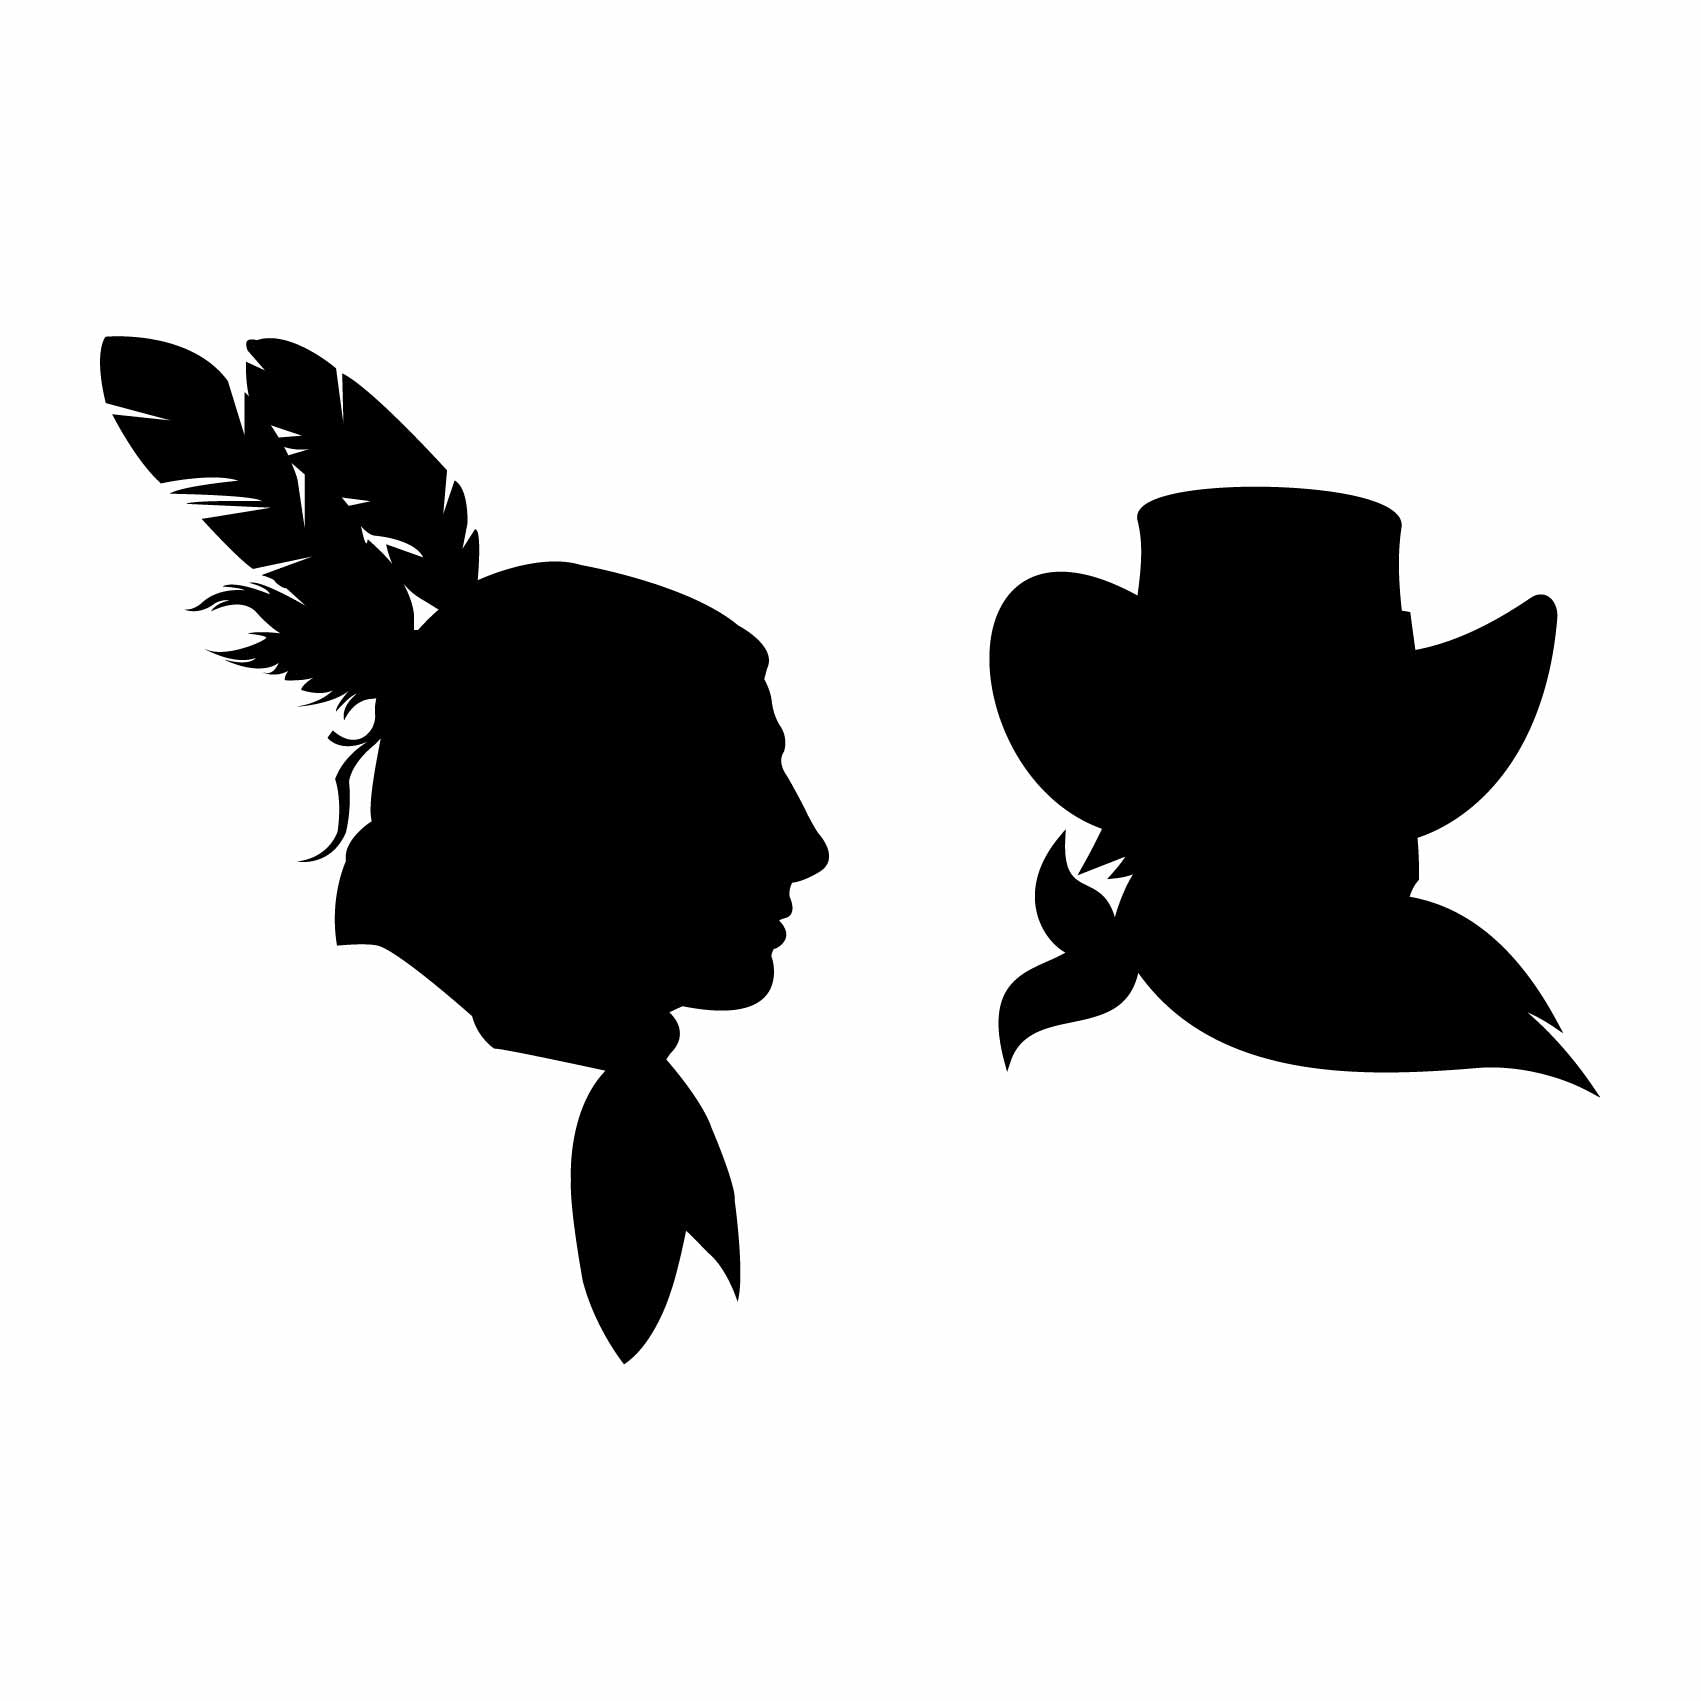 stickers-indien-cowboy-silhouette-ref5indien-autocollant-muraux-indiens-sticker-mural-chambre-enfant-deco-salon-native-american-amerindien-amerindiens-(2)